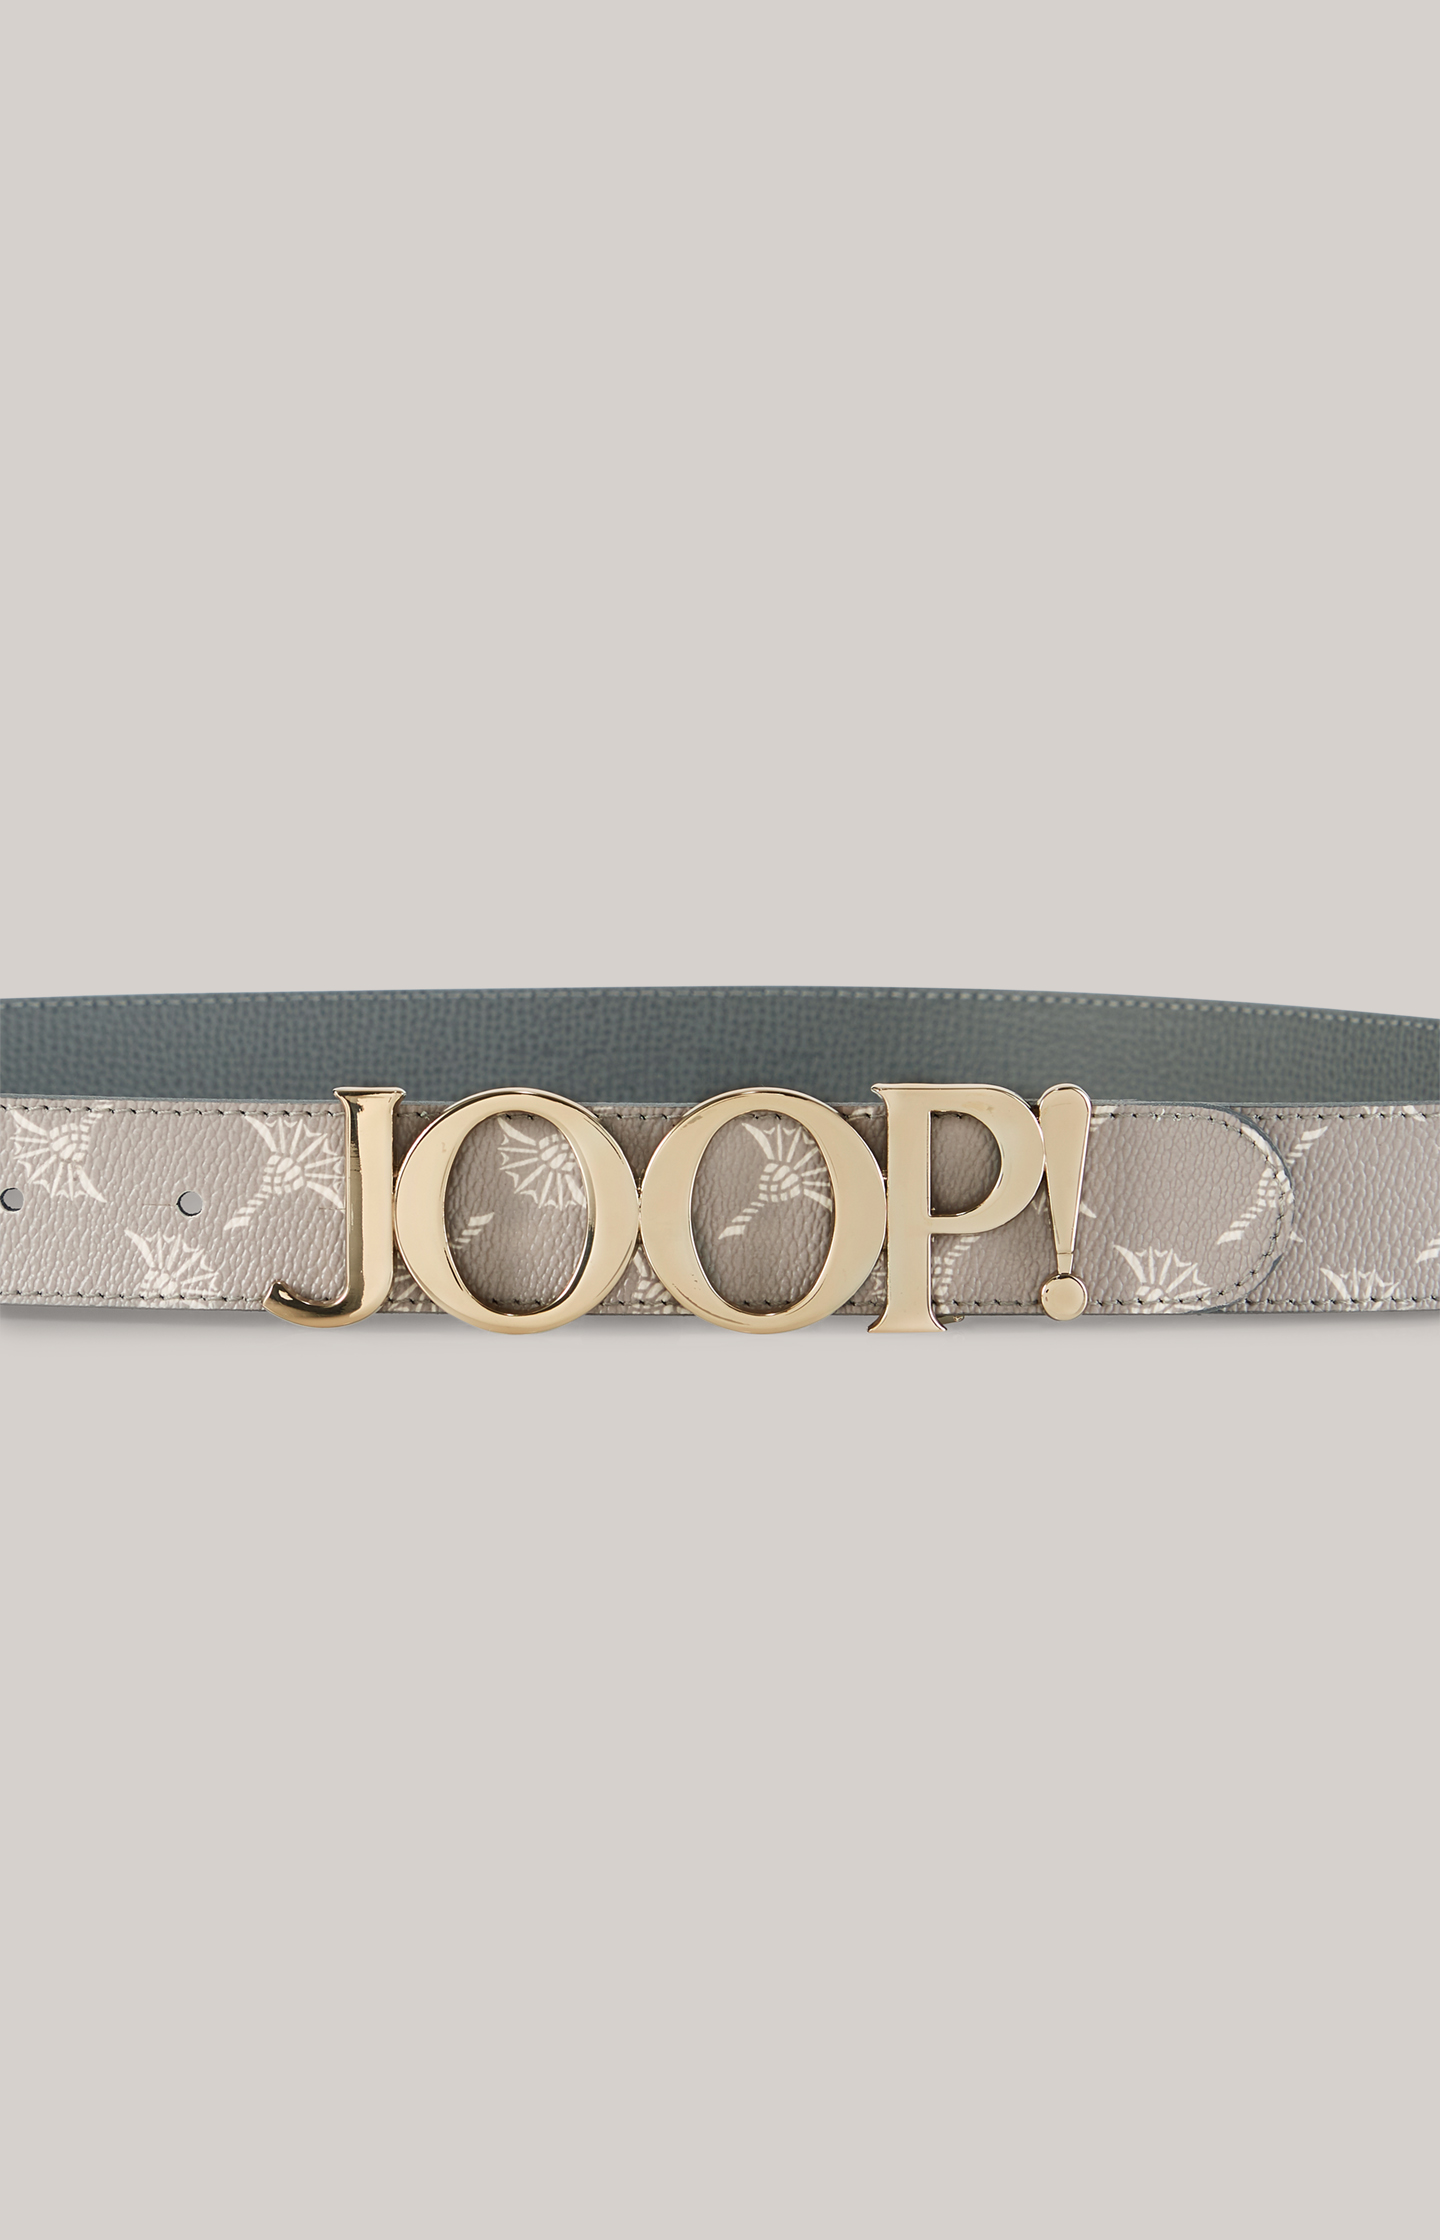 leather belt in light grey - in the JOOP! Online Shop